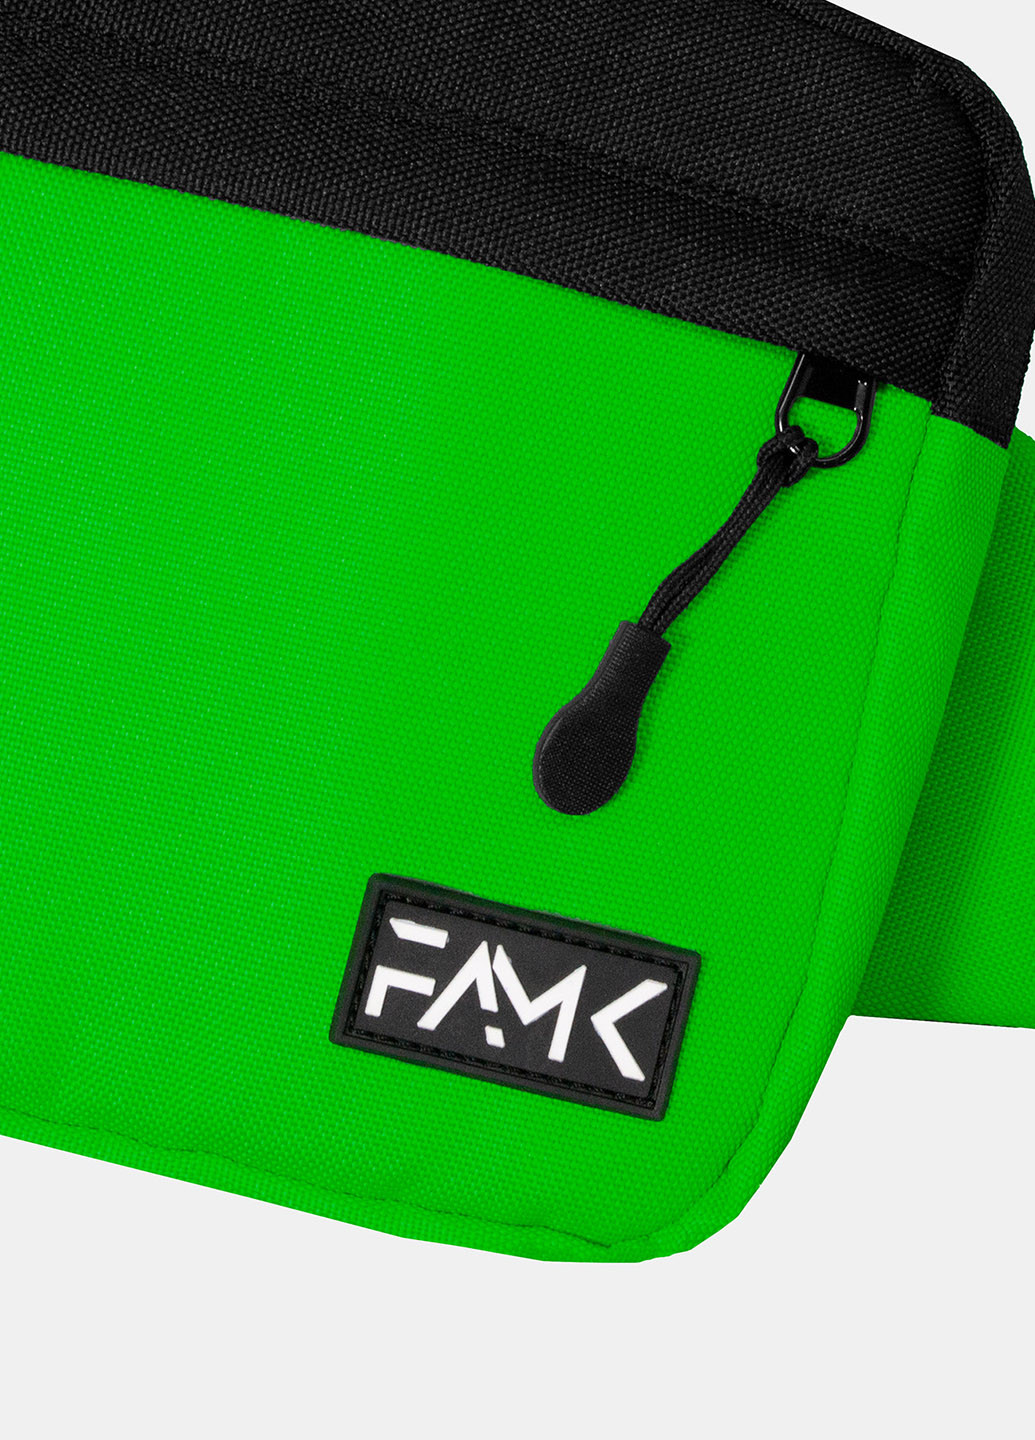 Сумка на пояс R3 зеленая/черная Famk (254155110)